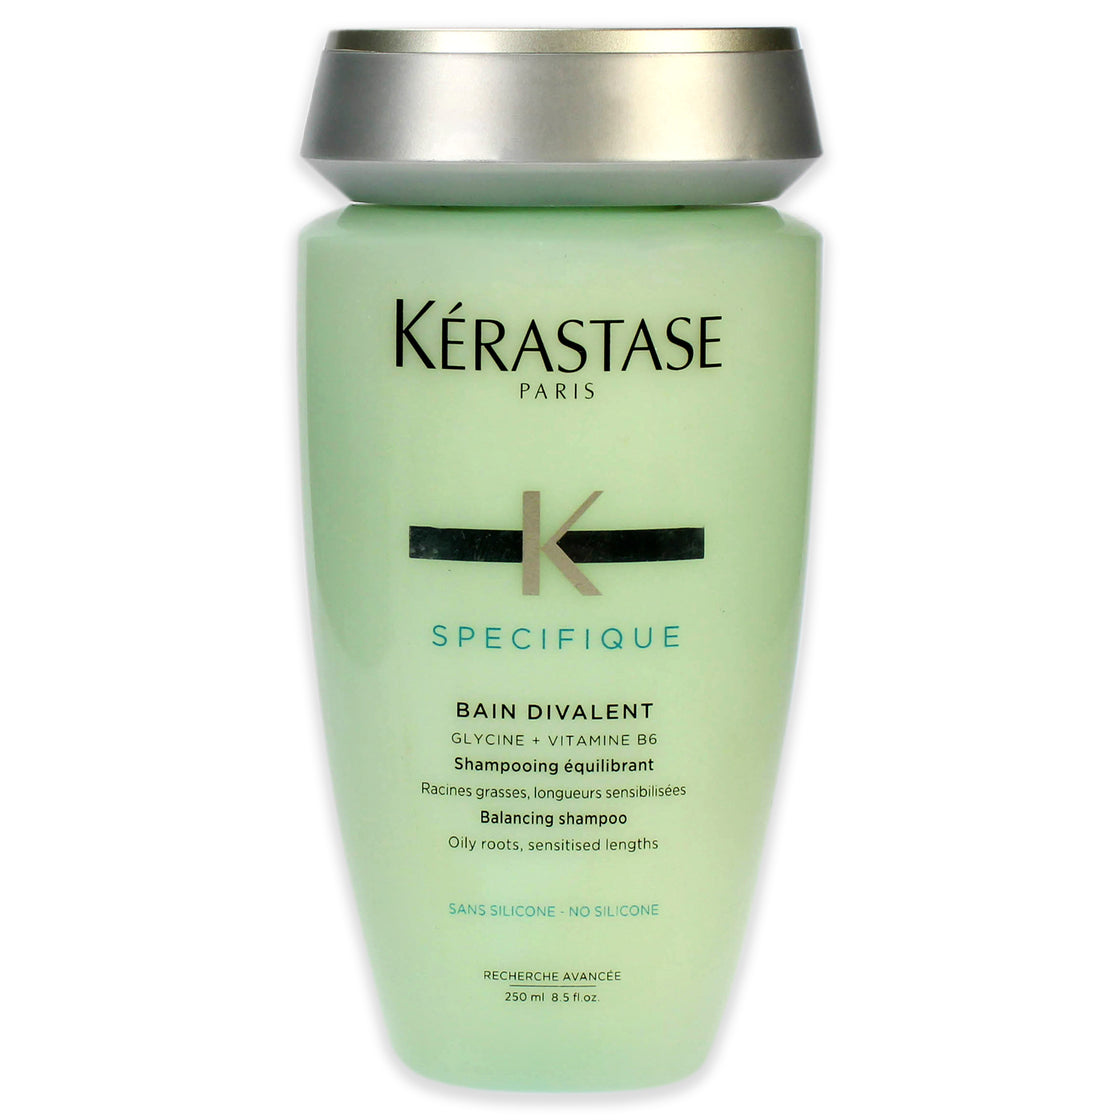 Specifique Bain Divalent Shampoo by Kerastase for Unisex - 8.5 oz Shampoo